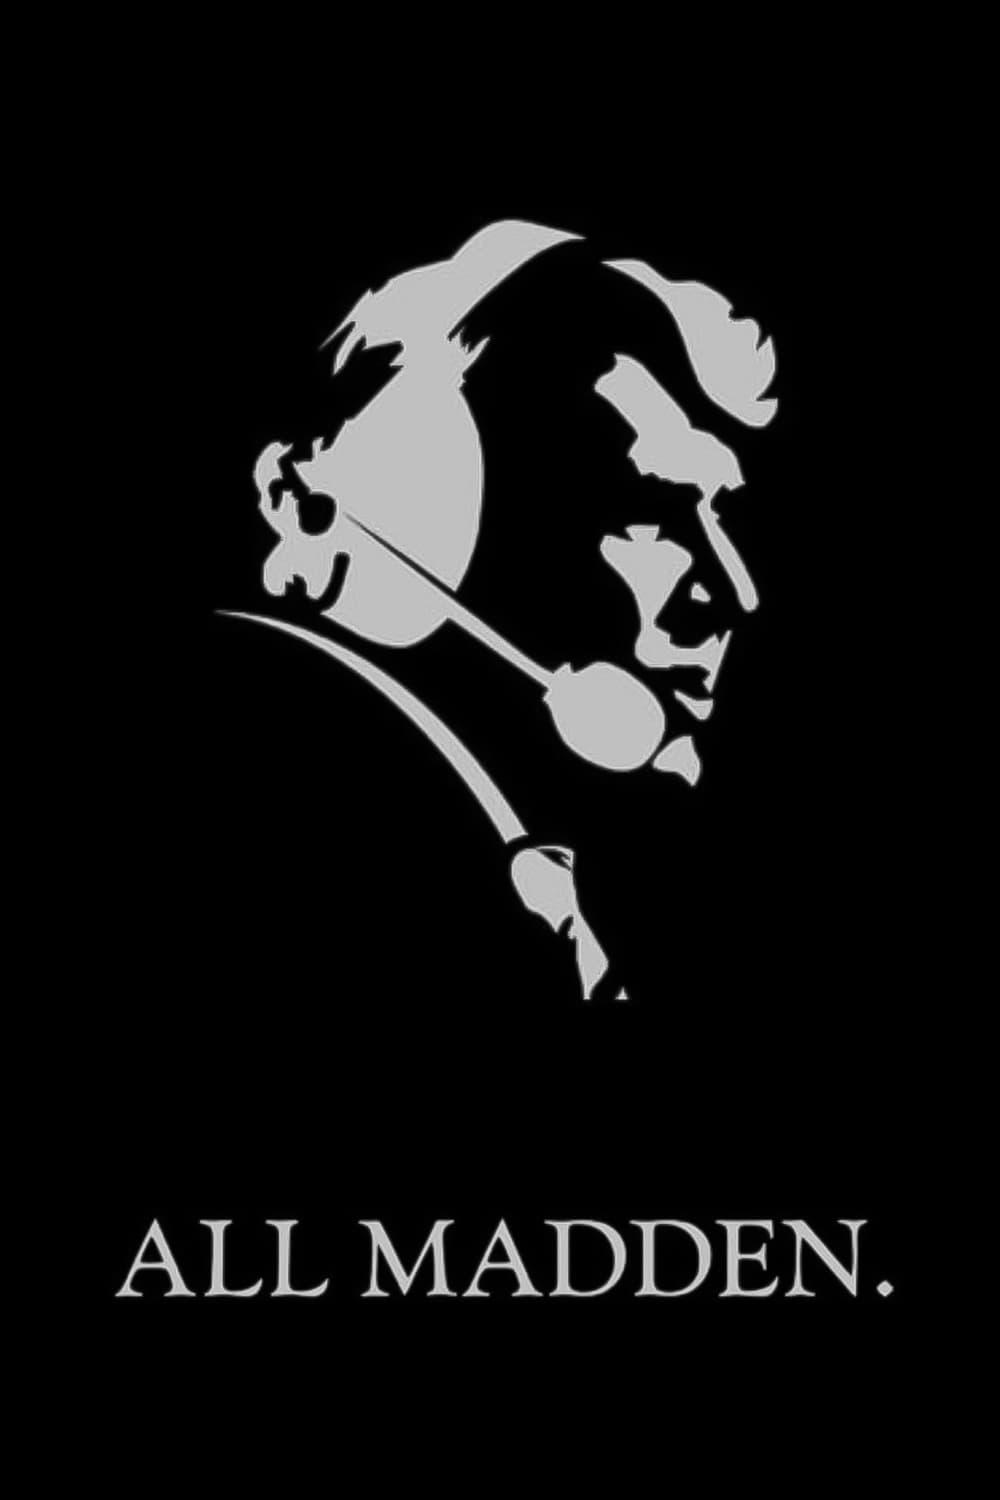 All Madden poster